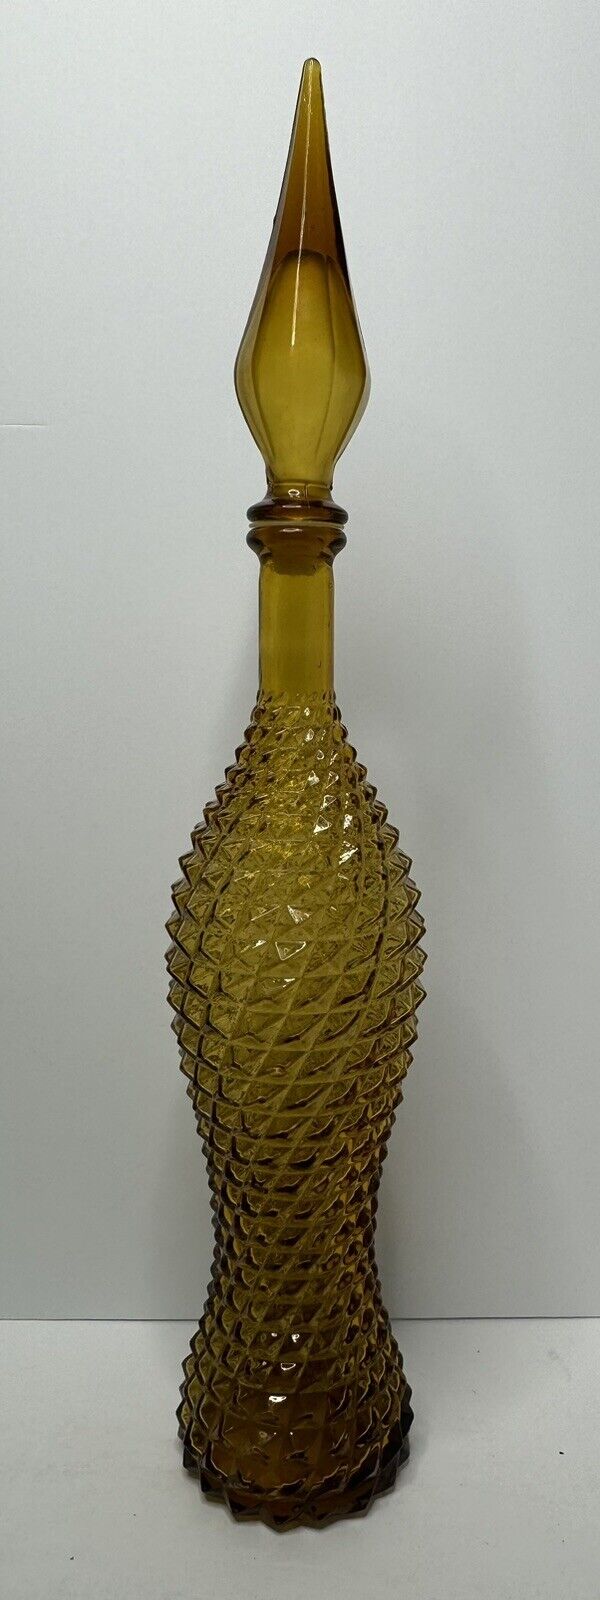 Vintage Glass Yellow Diamond Cut Pattern Decanter Genie Bottle 23